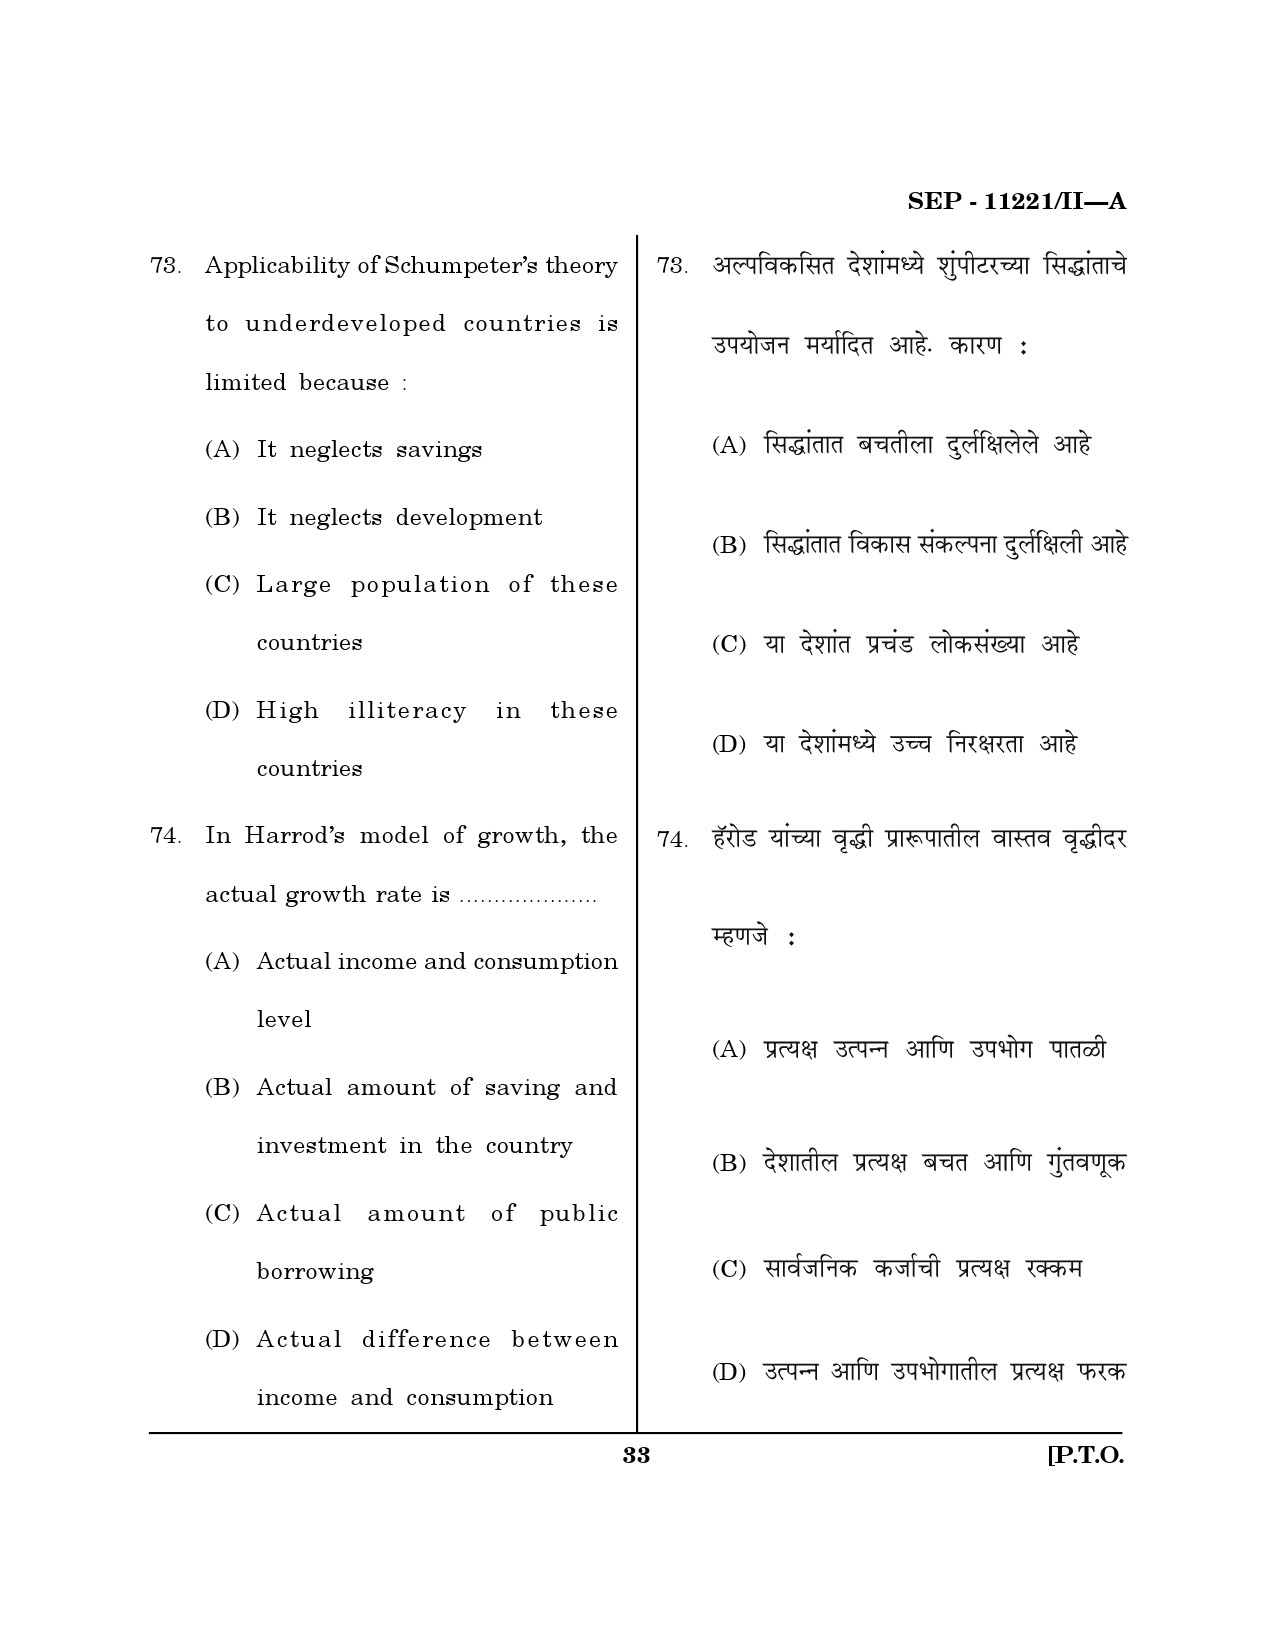 Maharashtra SET Economics Exam Question Paper September 2021 32